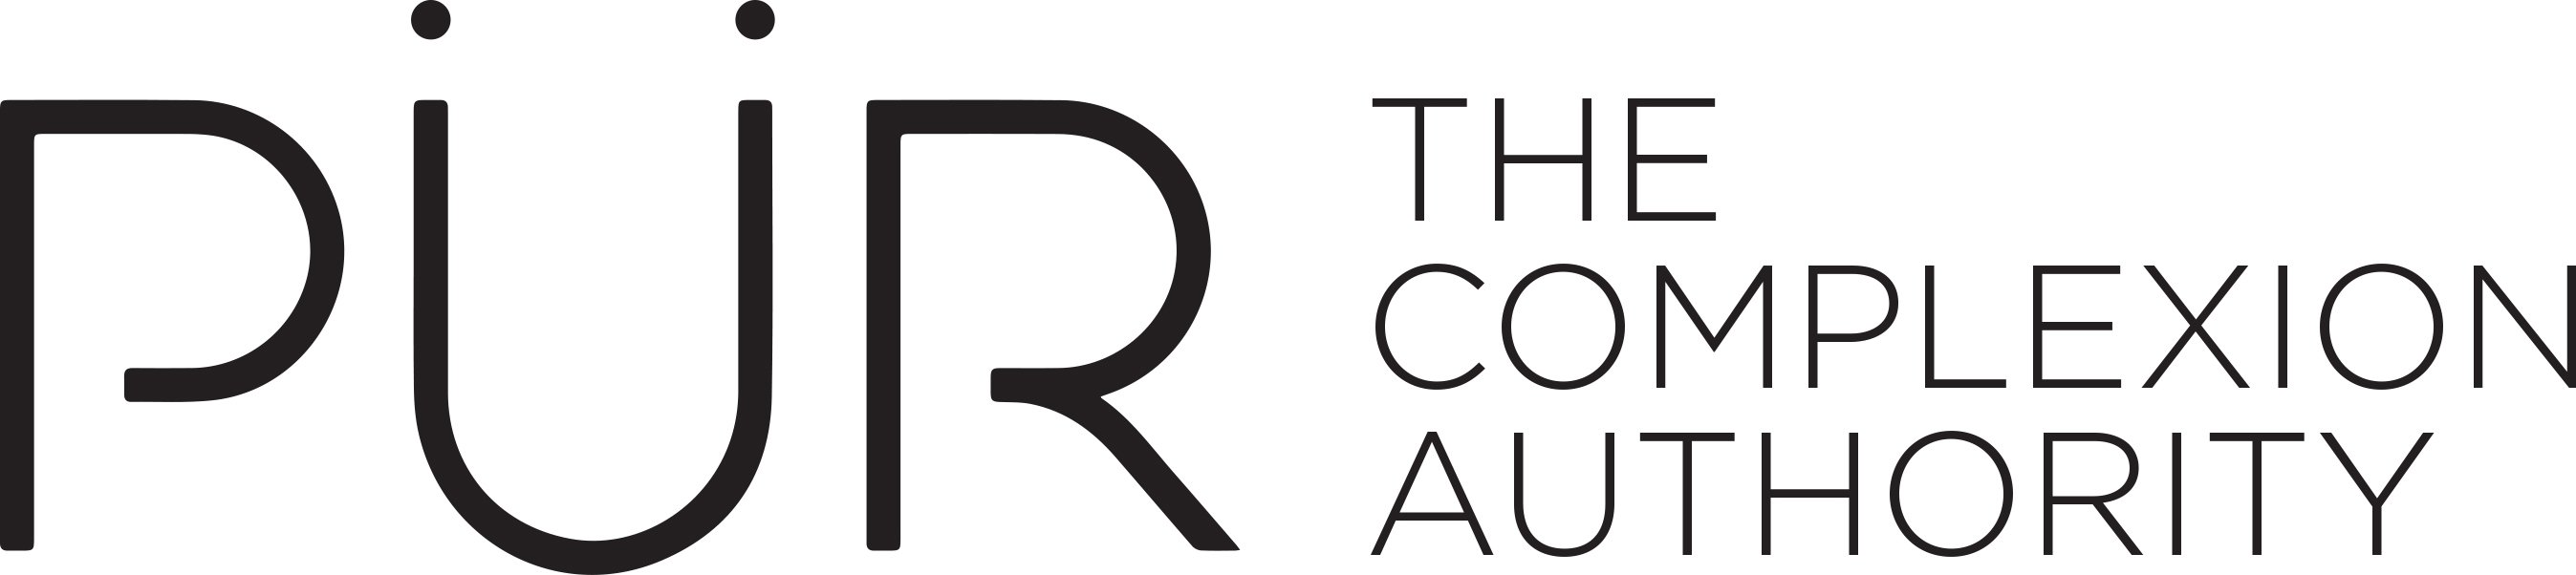 Trademark Logo PÜR THE COMPLEXION AUTHORITY